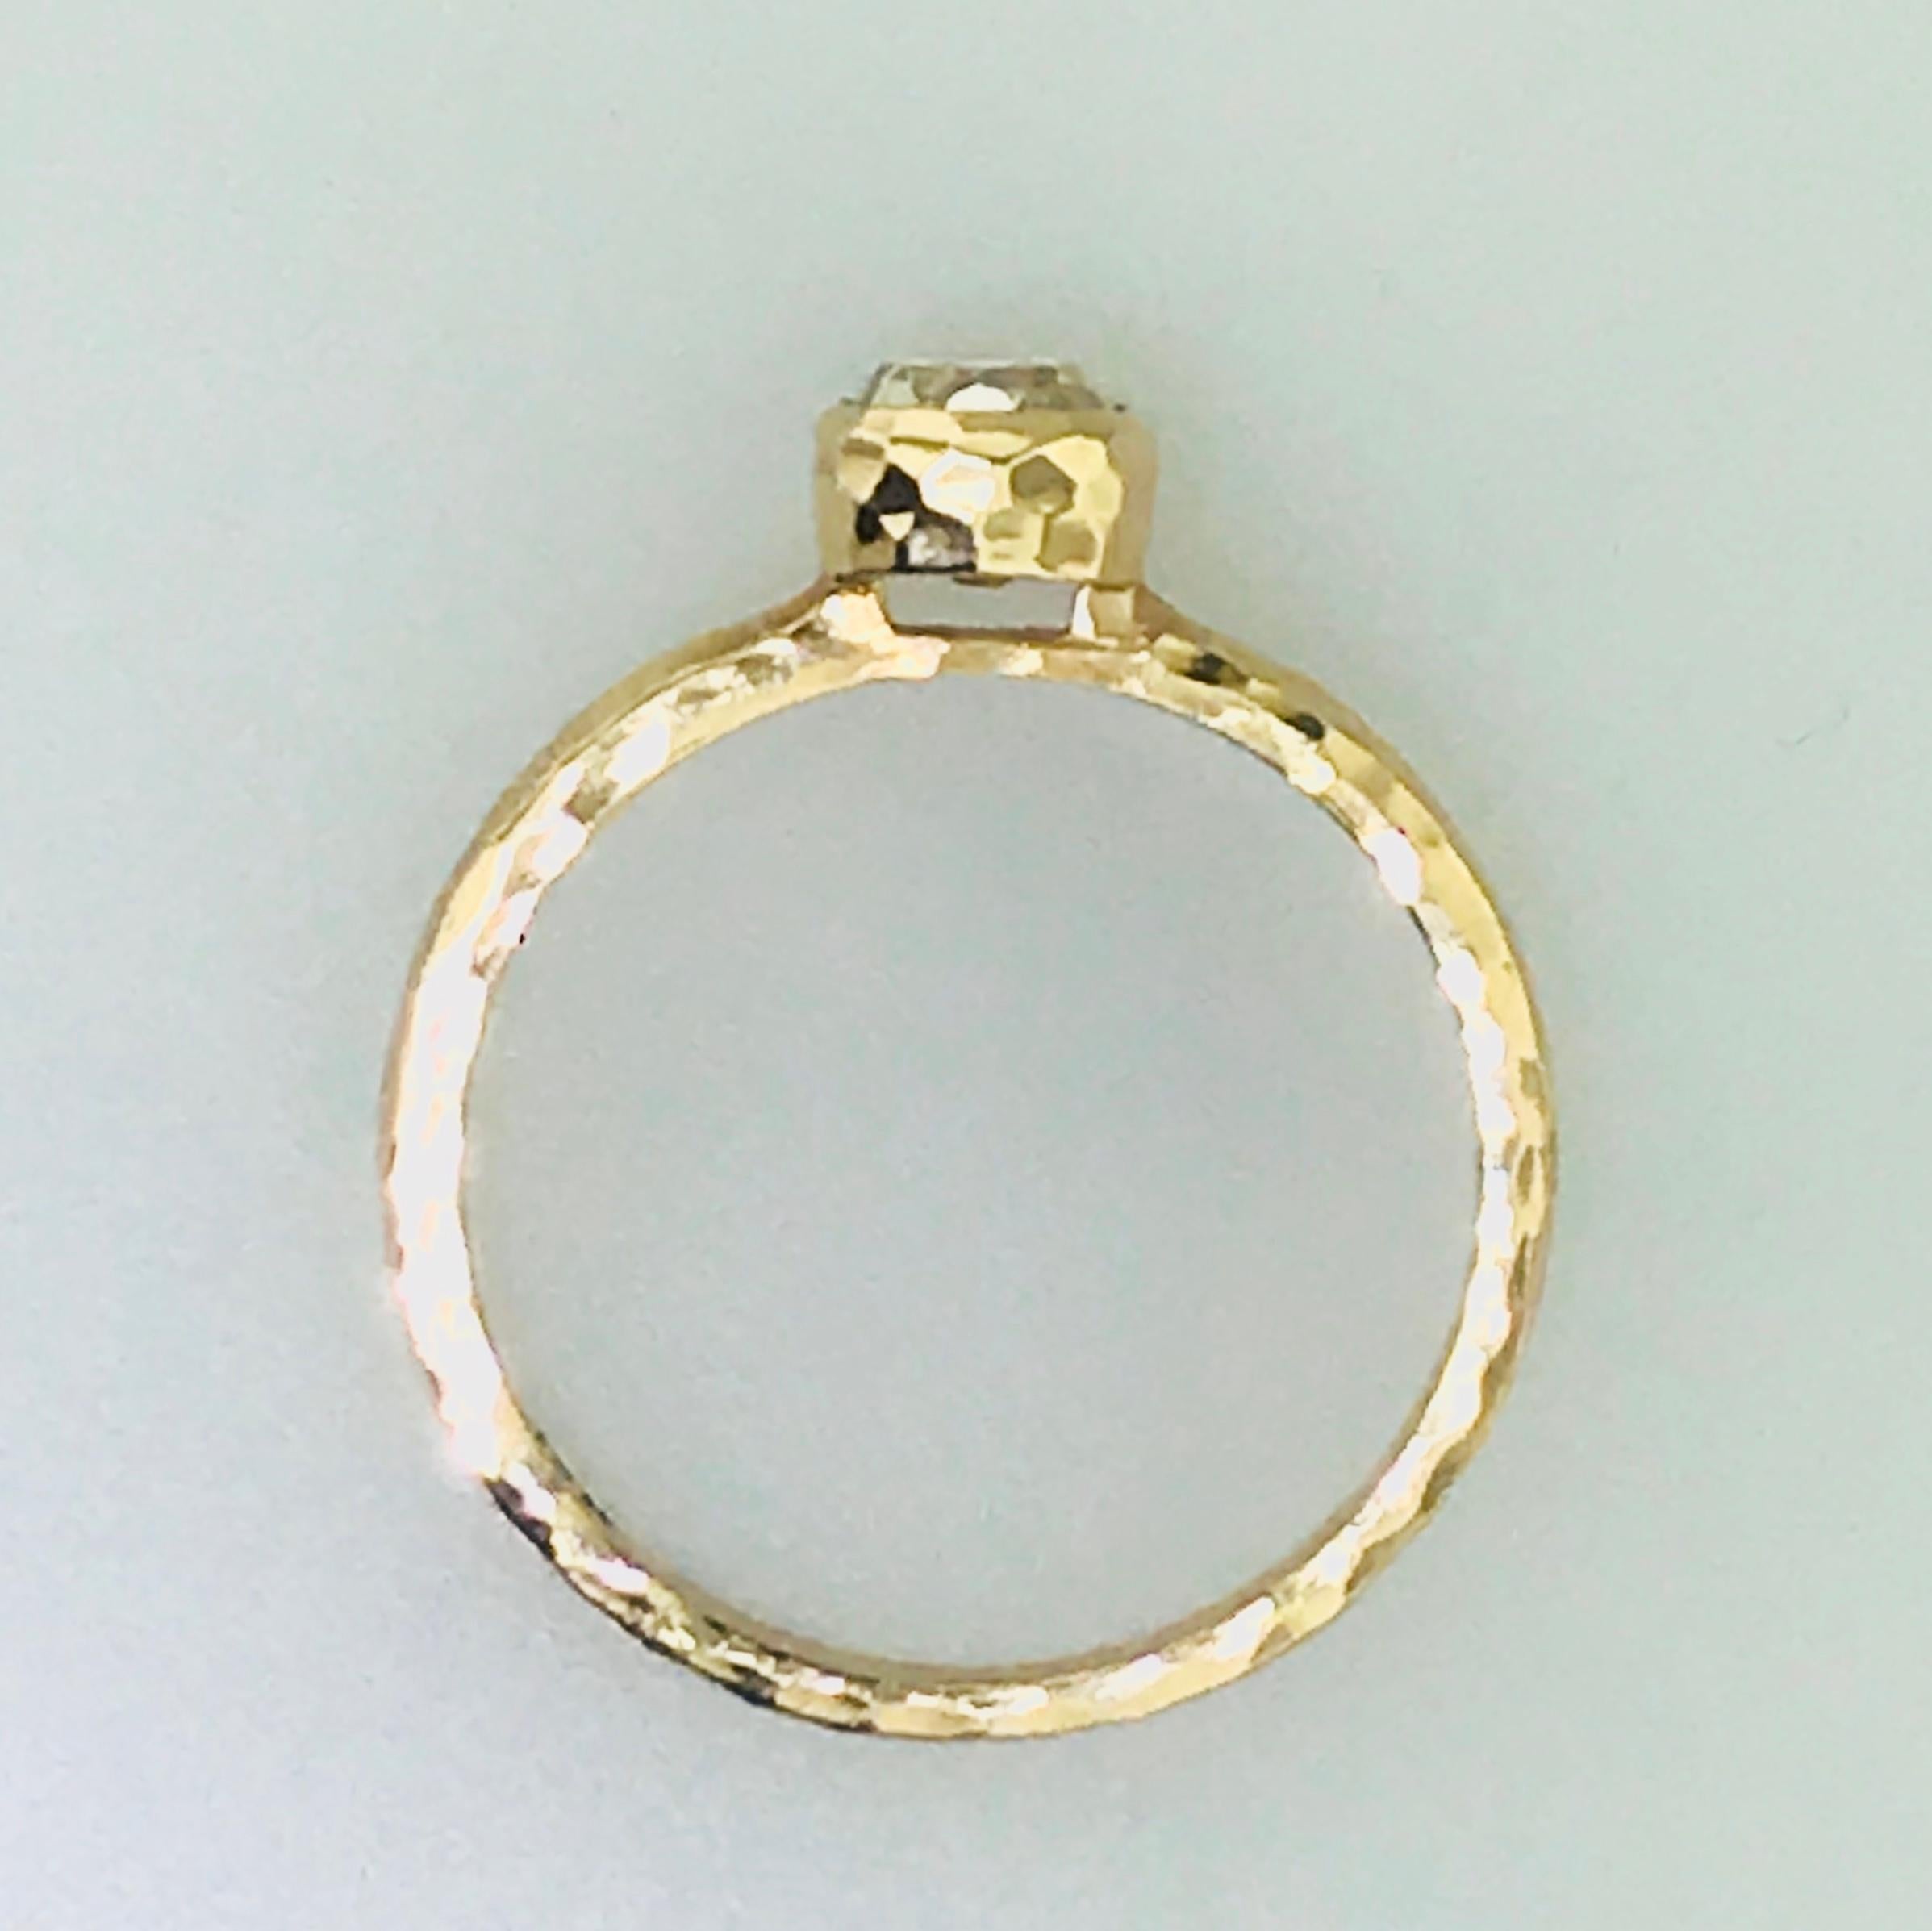 Artisan 1 Carat Old Mine Cut Diamond Handmade Solitaire Engagement Ring Hammered Finish